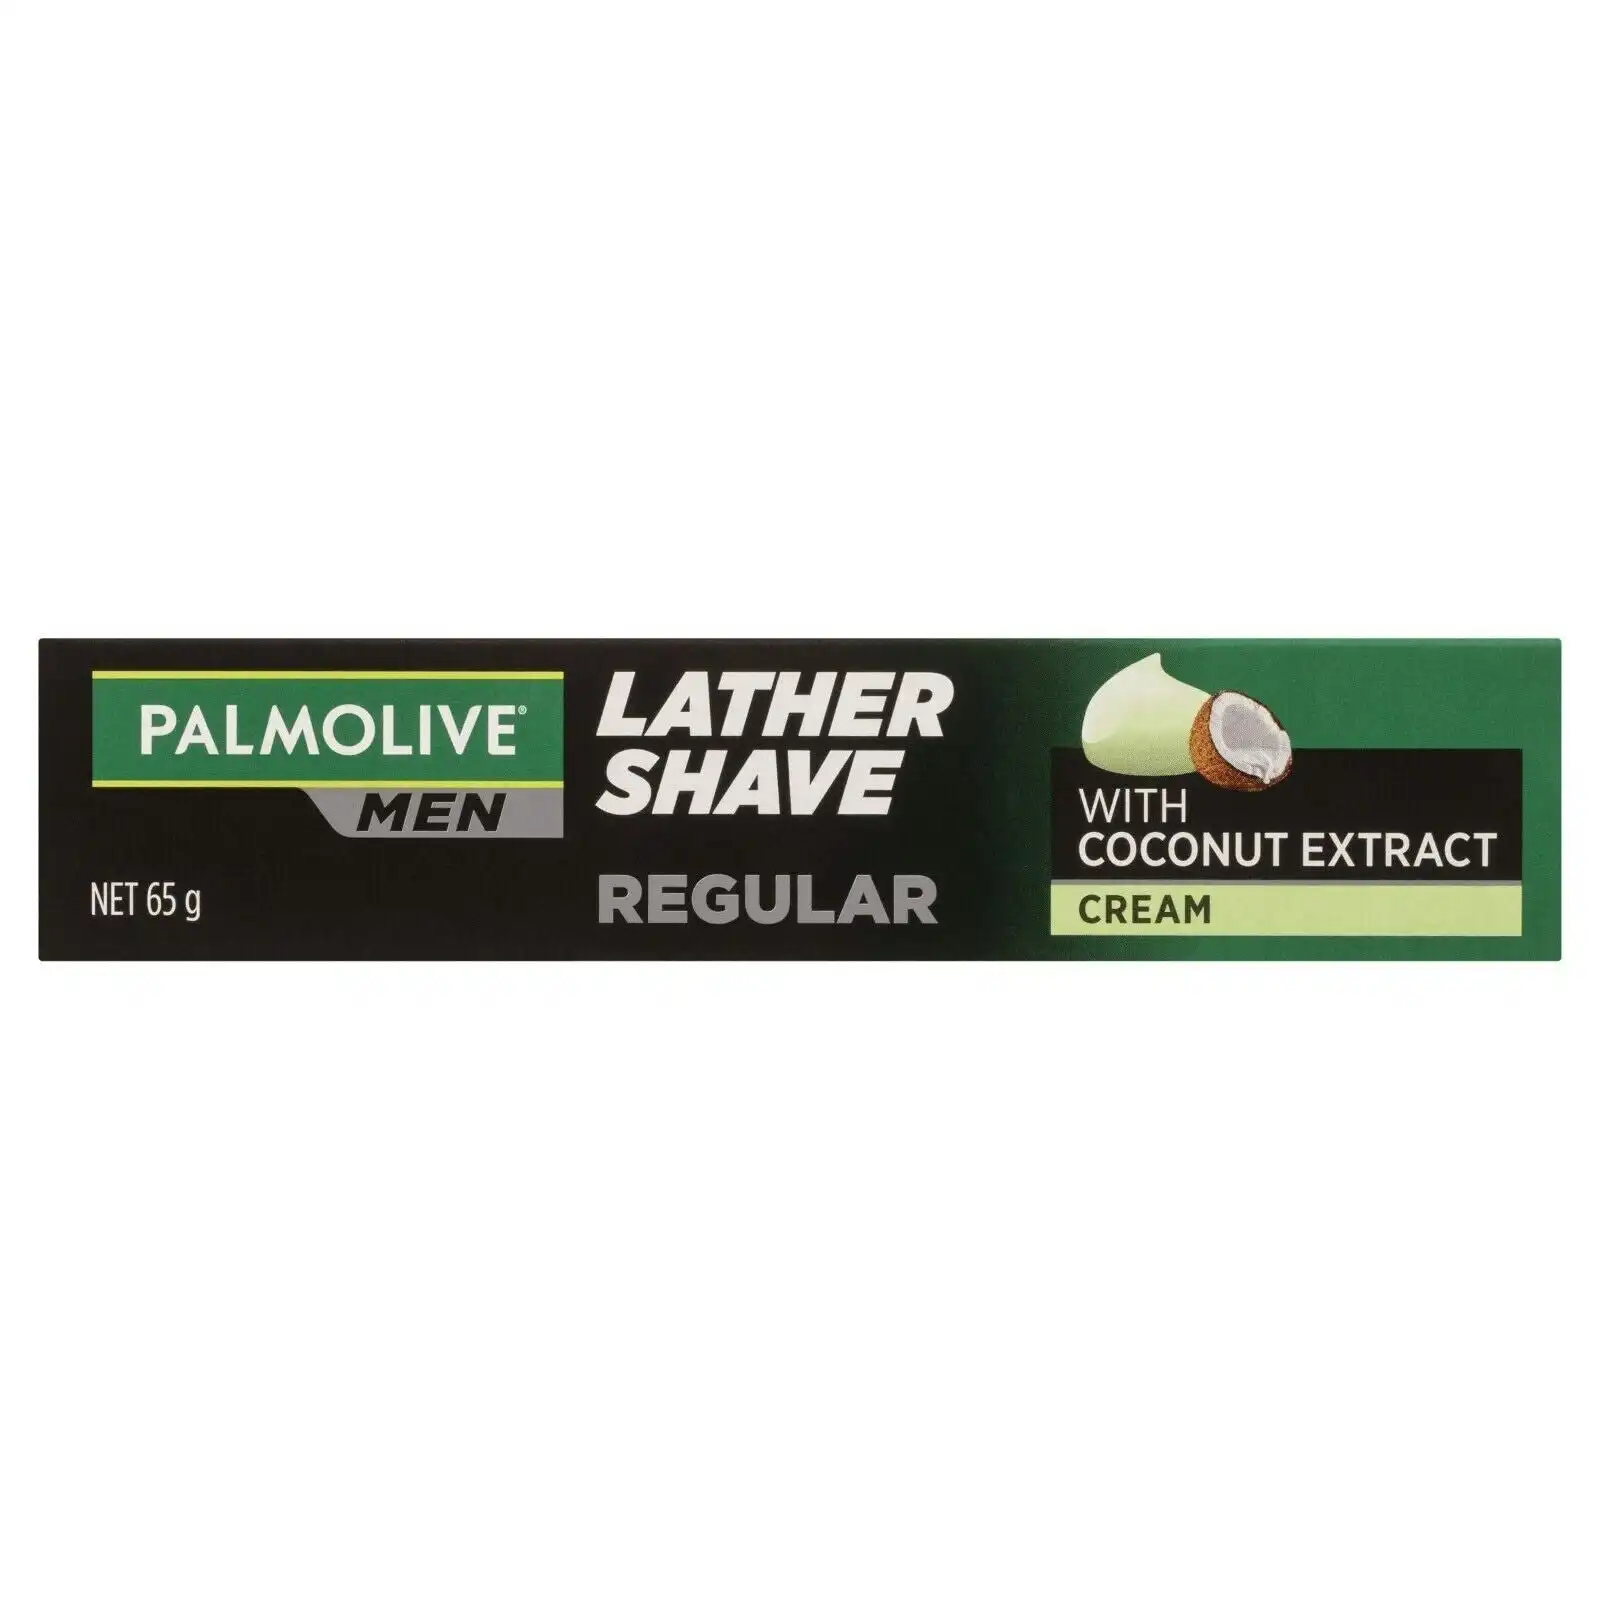 Palmolive Men Lather Shave Regular 65g Shaving Cream Coconut Extract